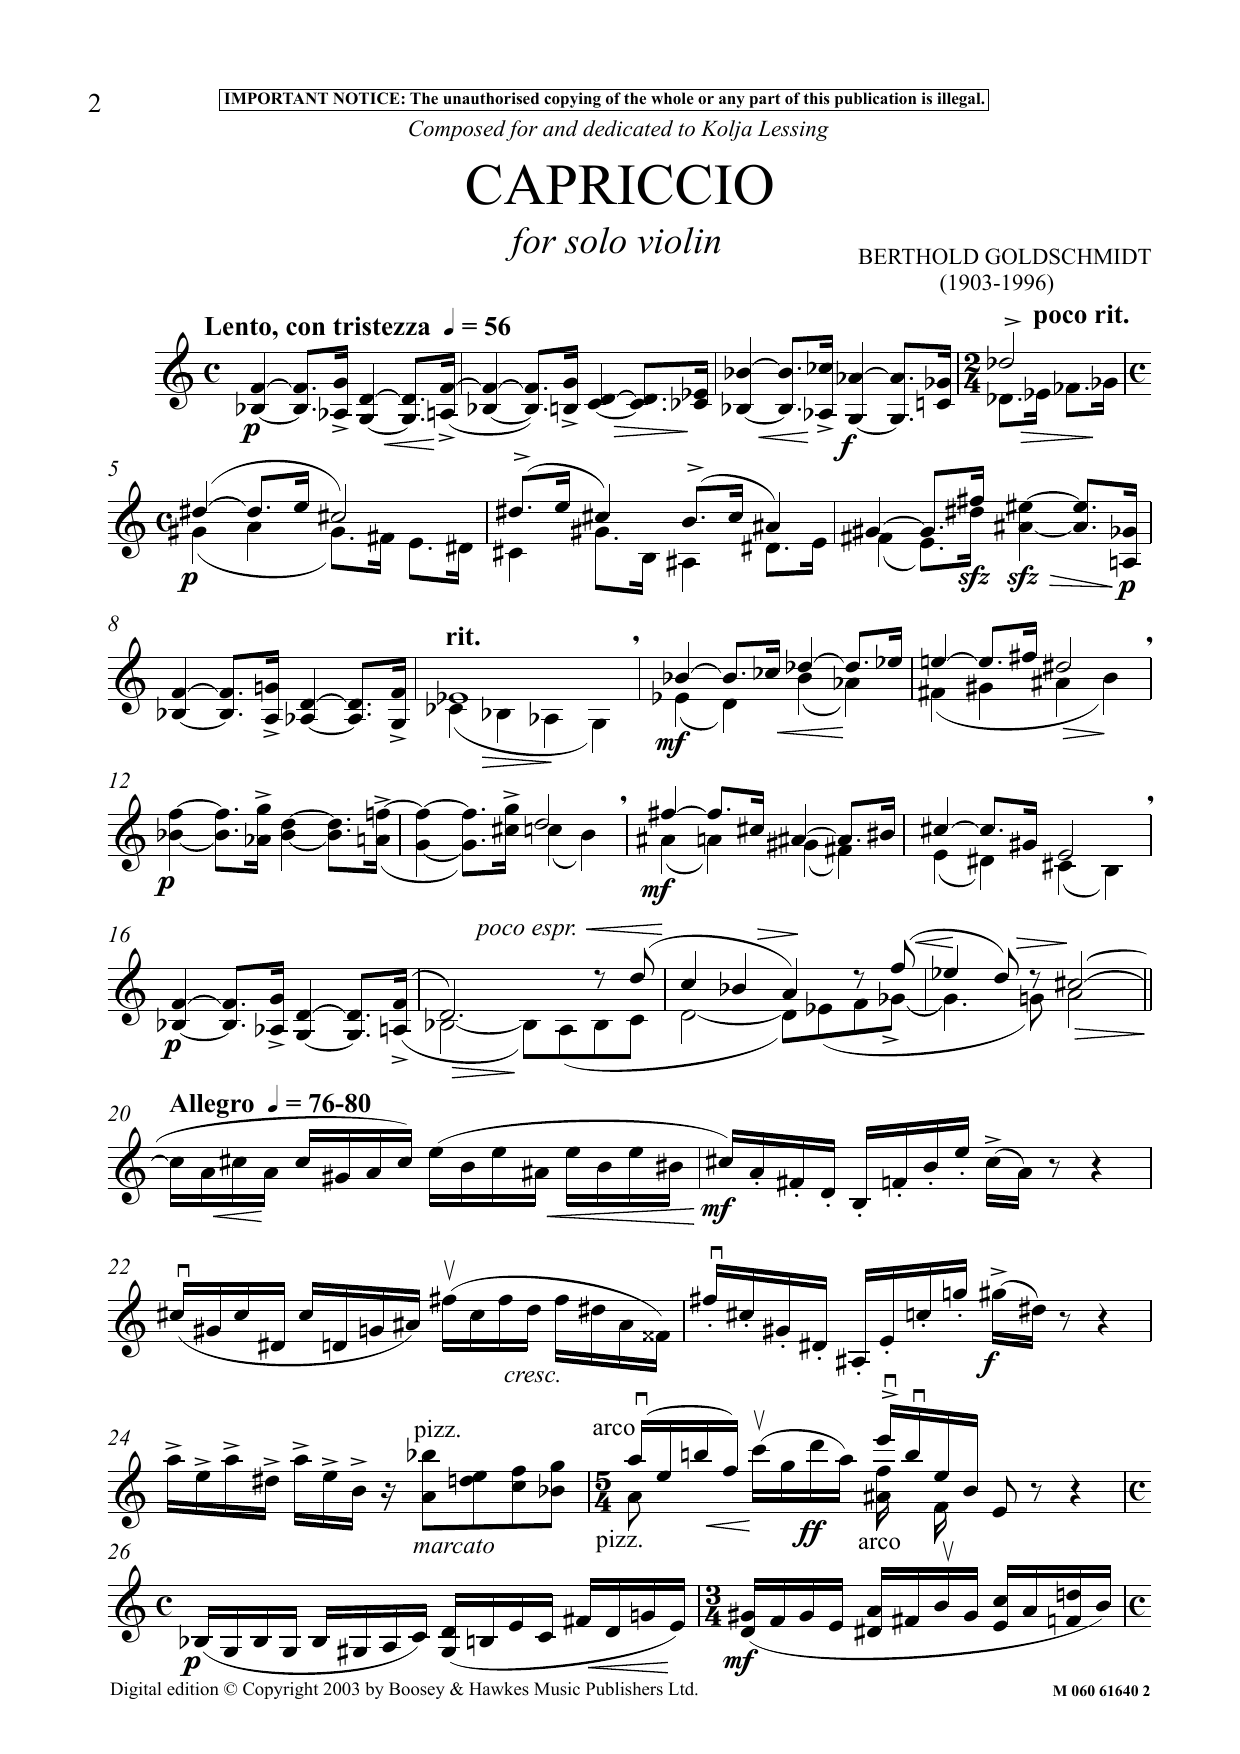 Download Berthold Goldschmidt Capriccio For Solo Violin Sheet Music